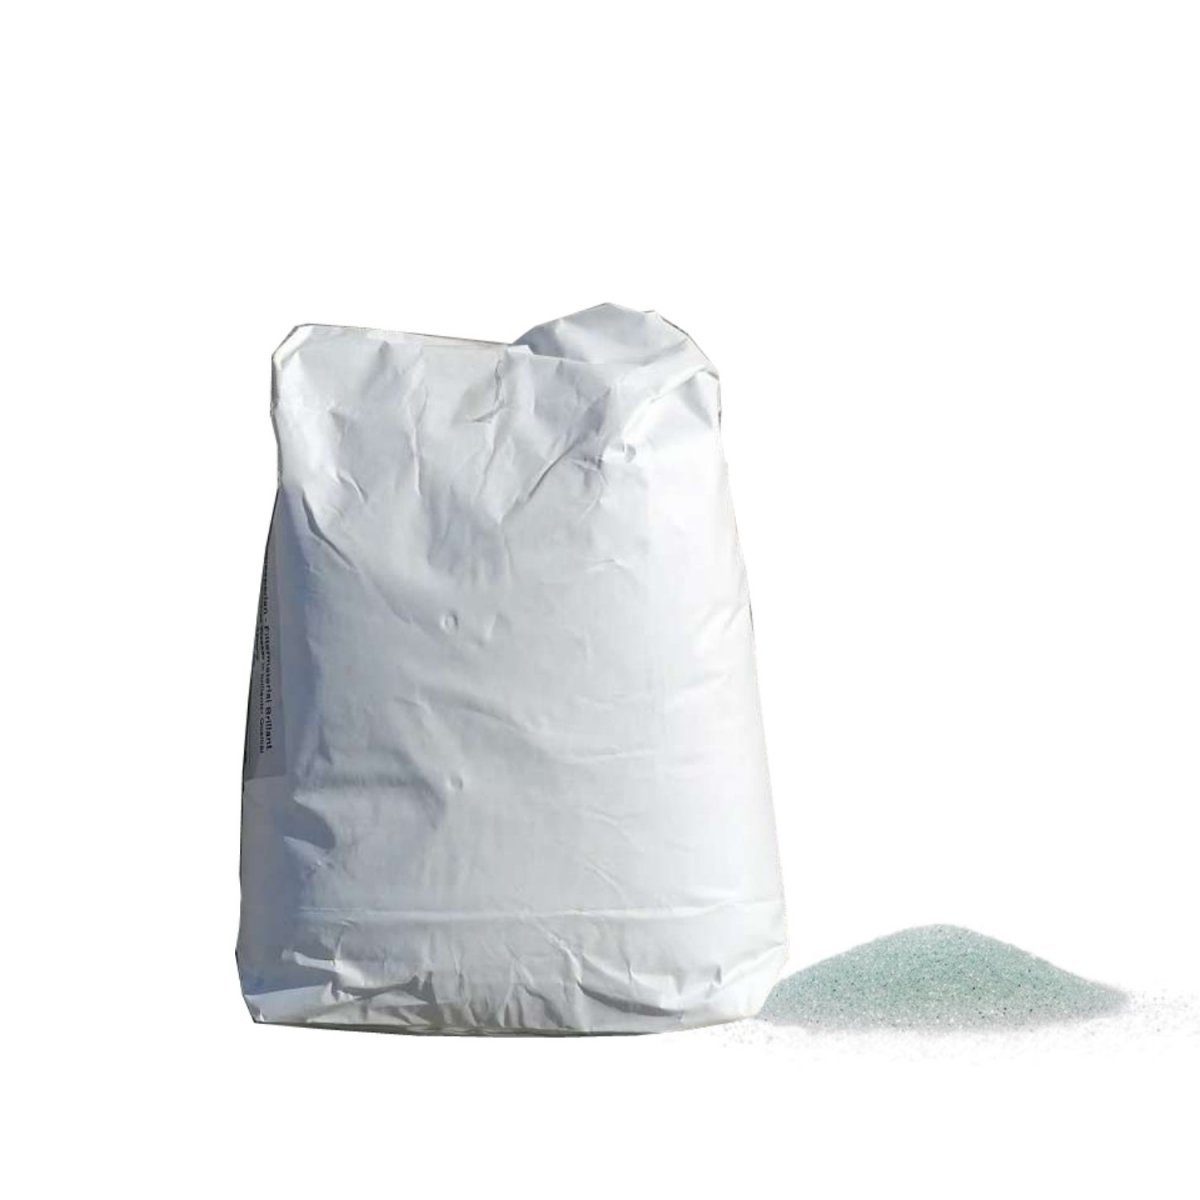 MERANUS GMBH Sandfilteranlage 20 kg FilterBeads big 1,0 - 2,0 mm Glasperlen anstatt Filtersand Pool